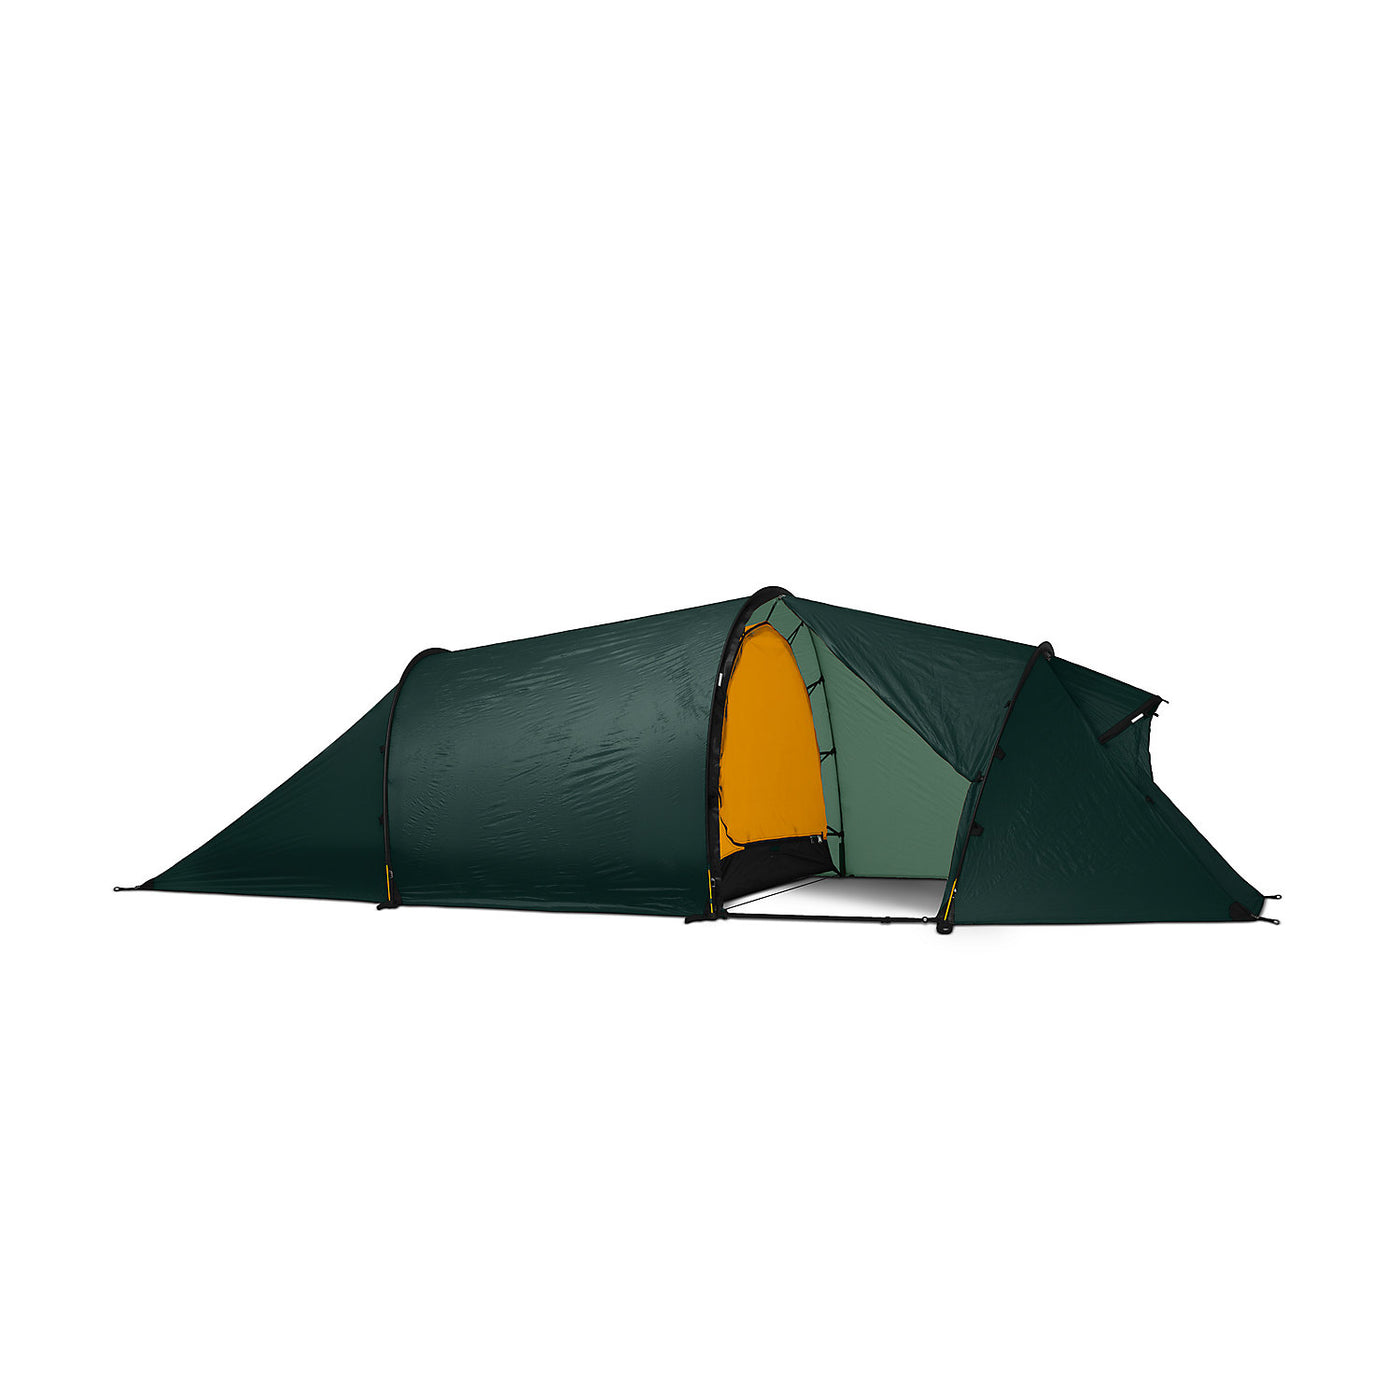 Nallo 2 GT Tent